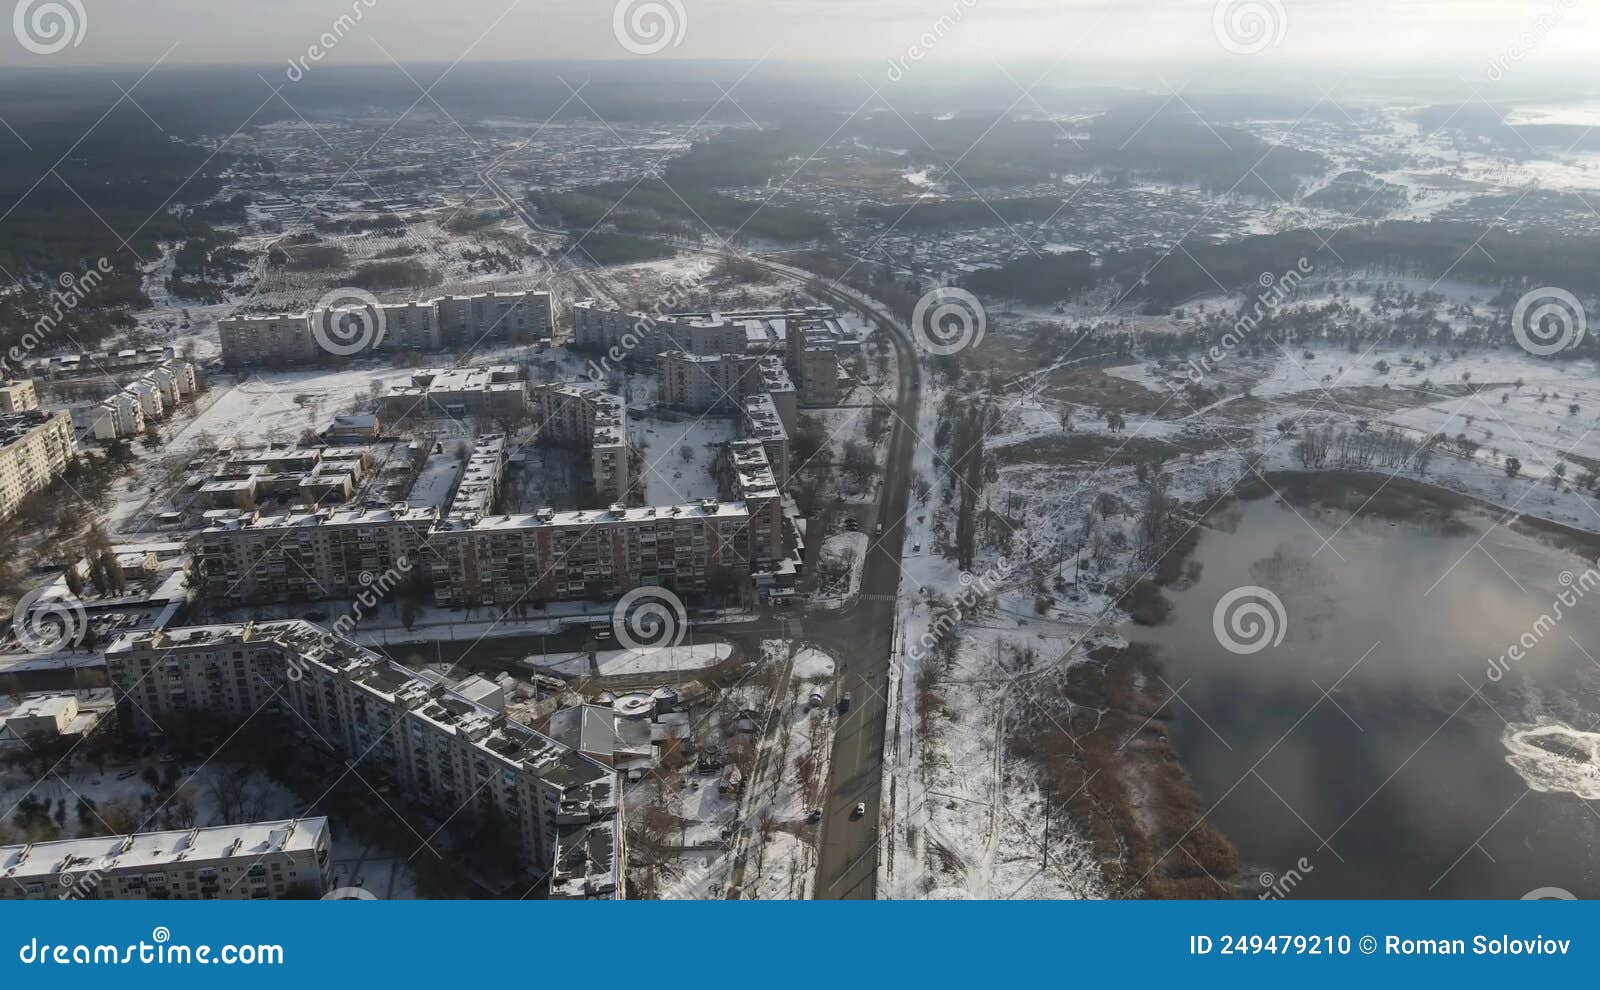 sievierodonetsk. city in ukraine. lugansk region. top view.